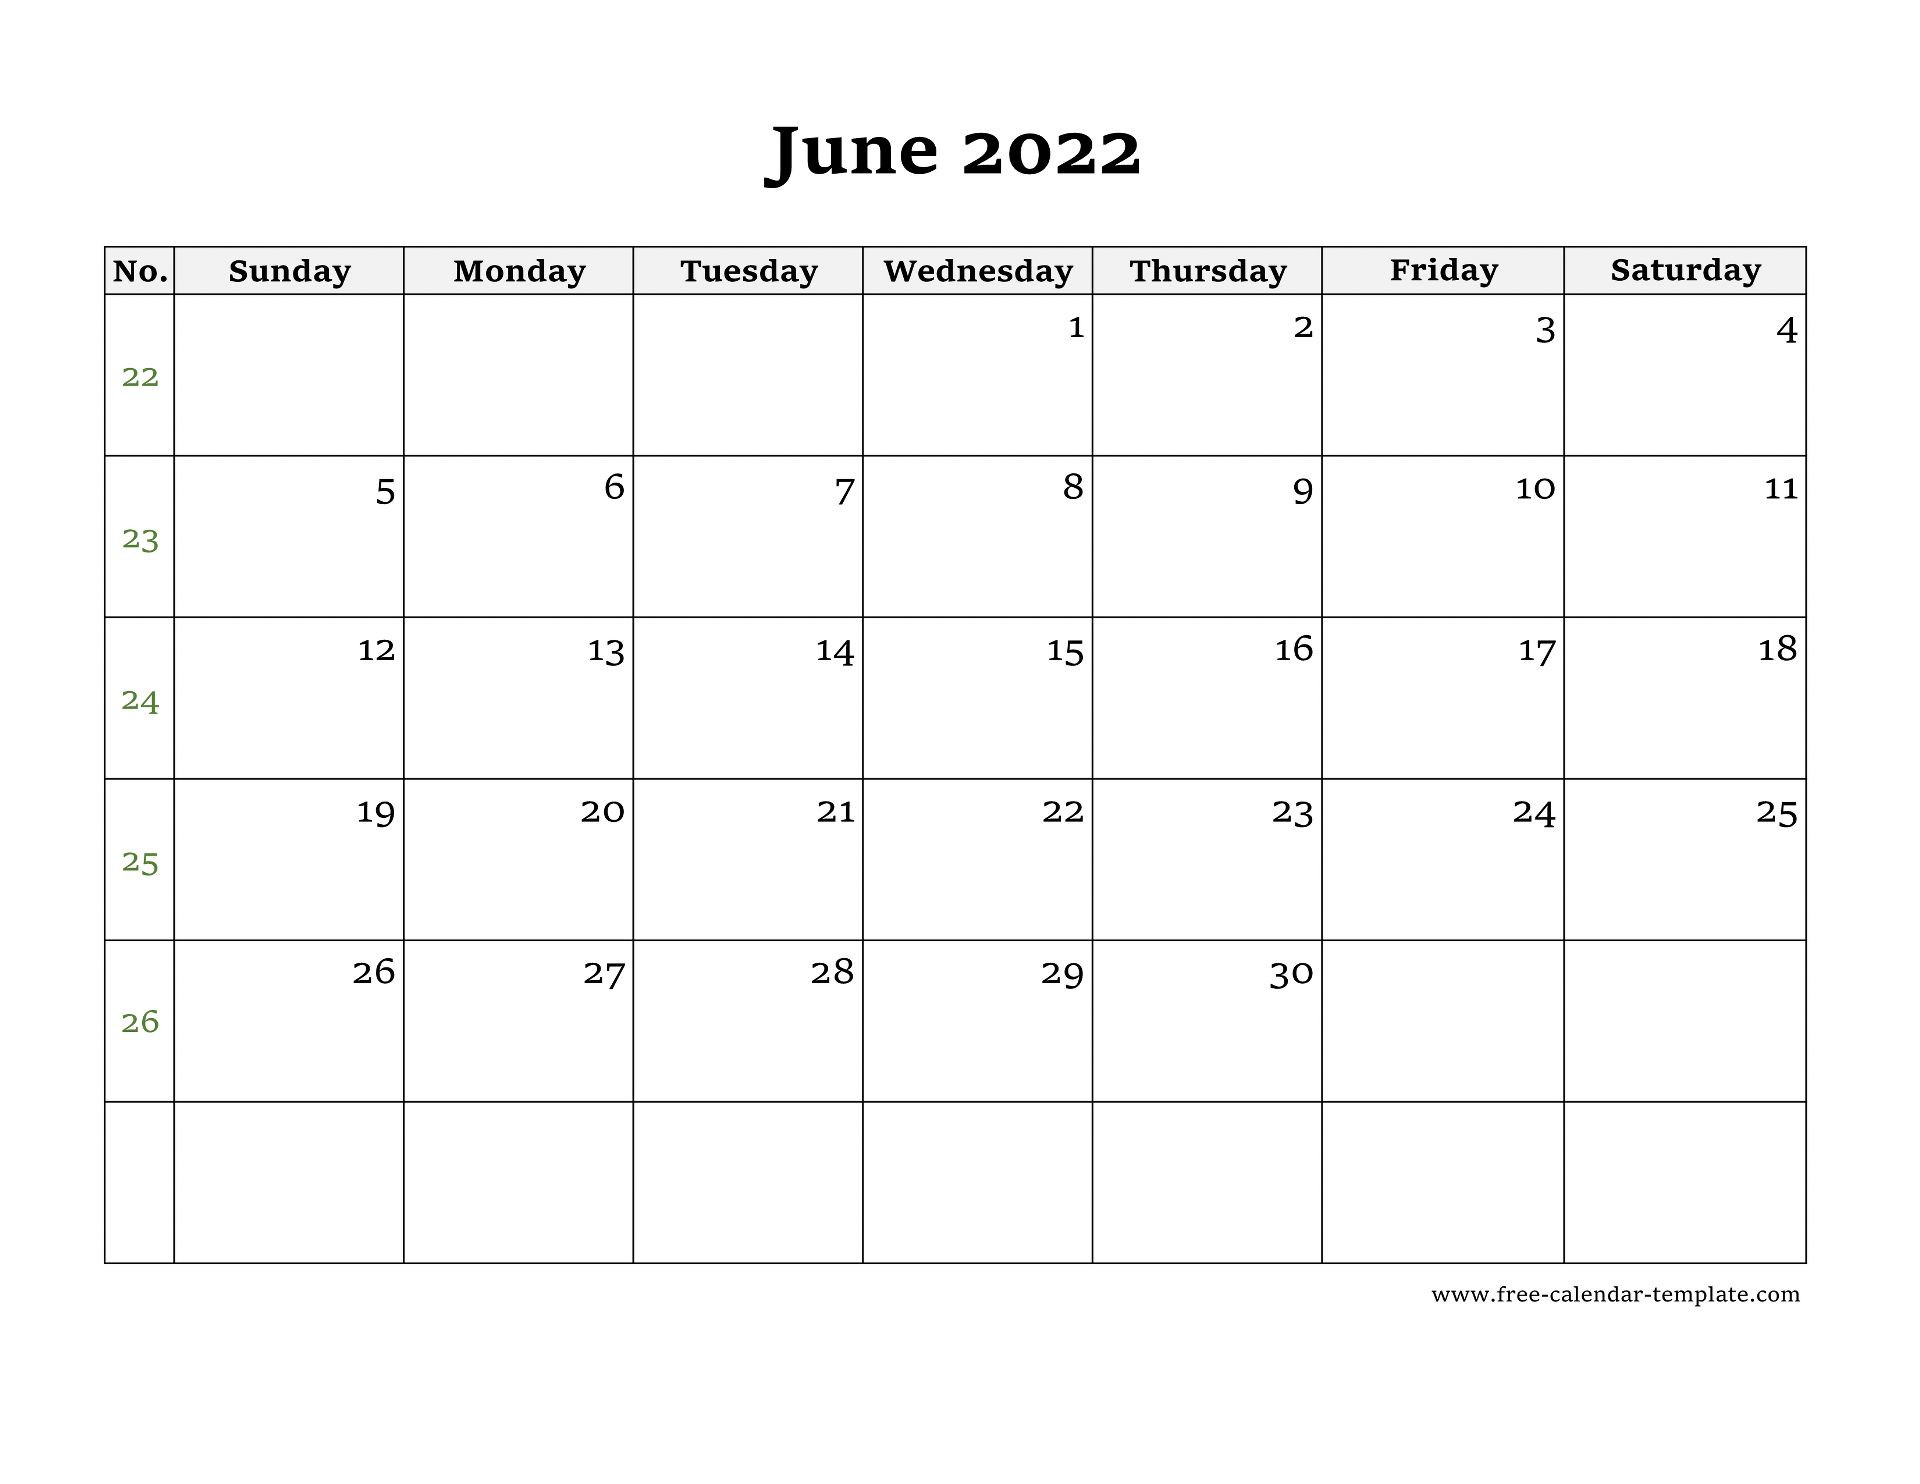 June 2022 Free Calendar Tempplate | Free-Calendar-Template  November 2022 To June 2022 Calendar